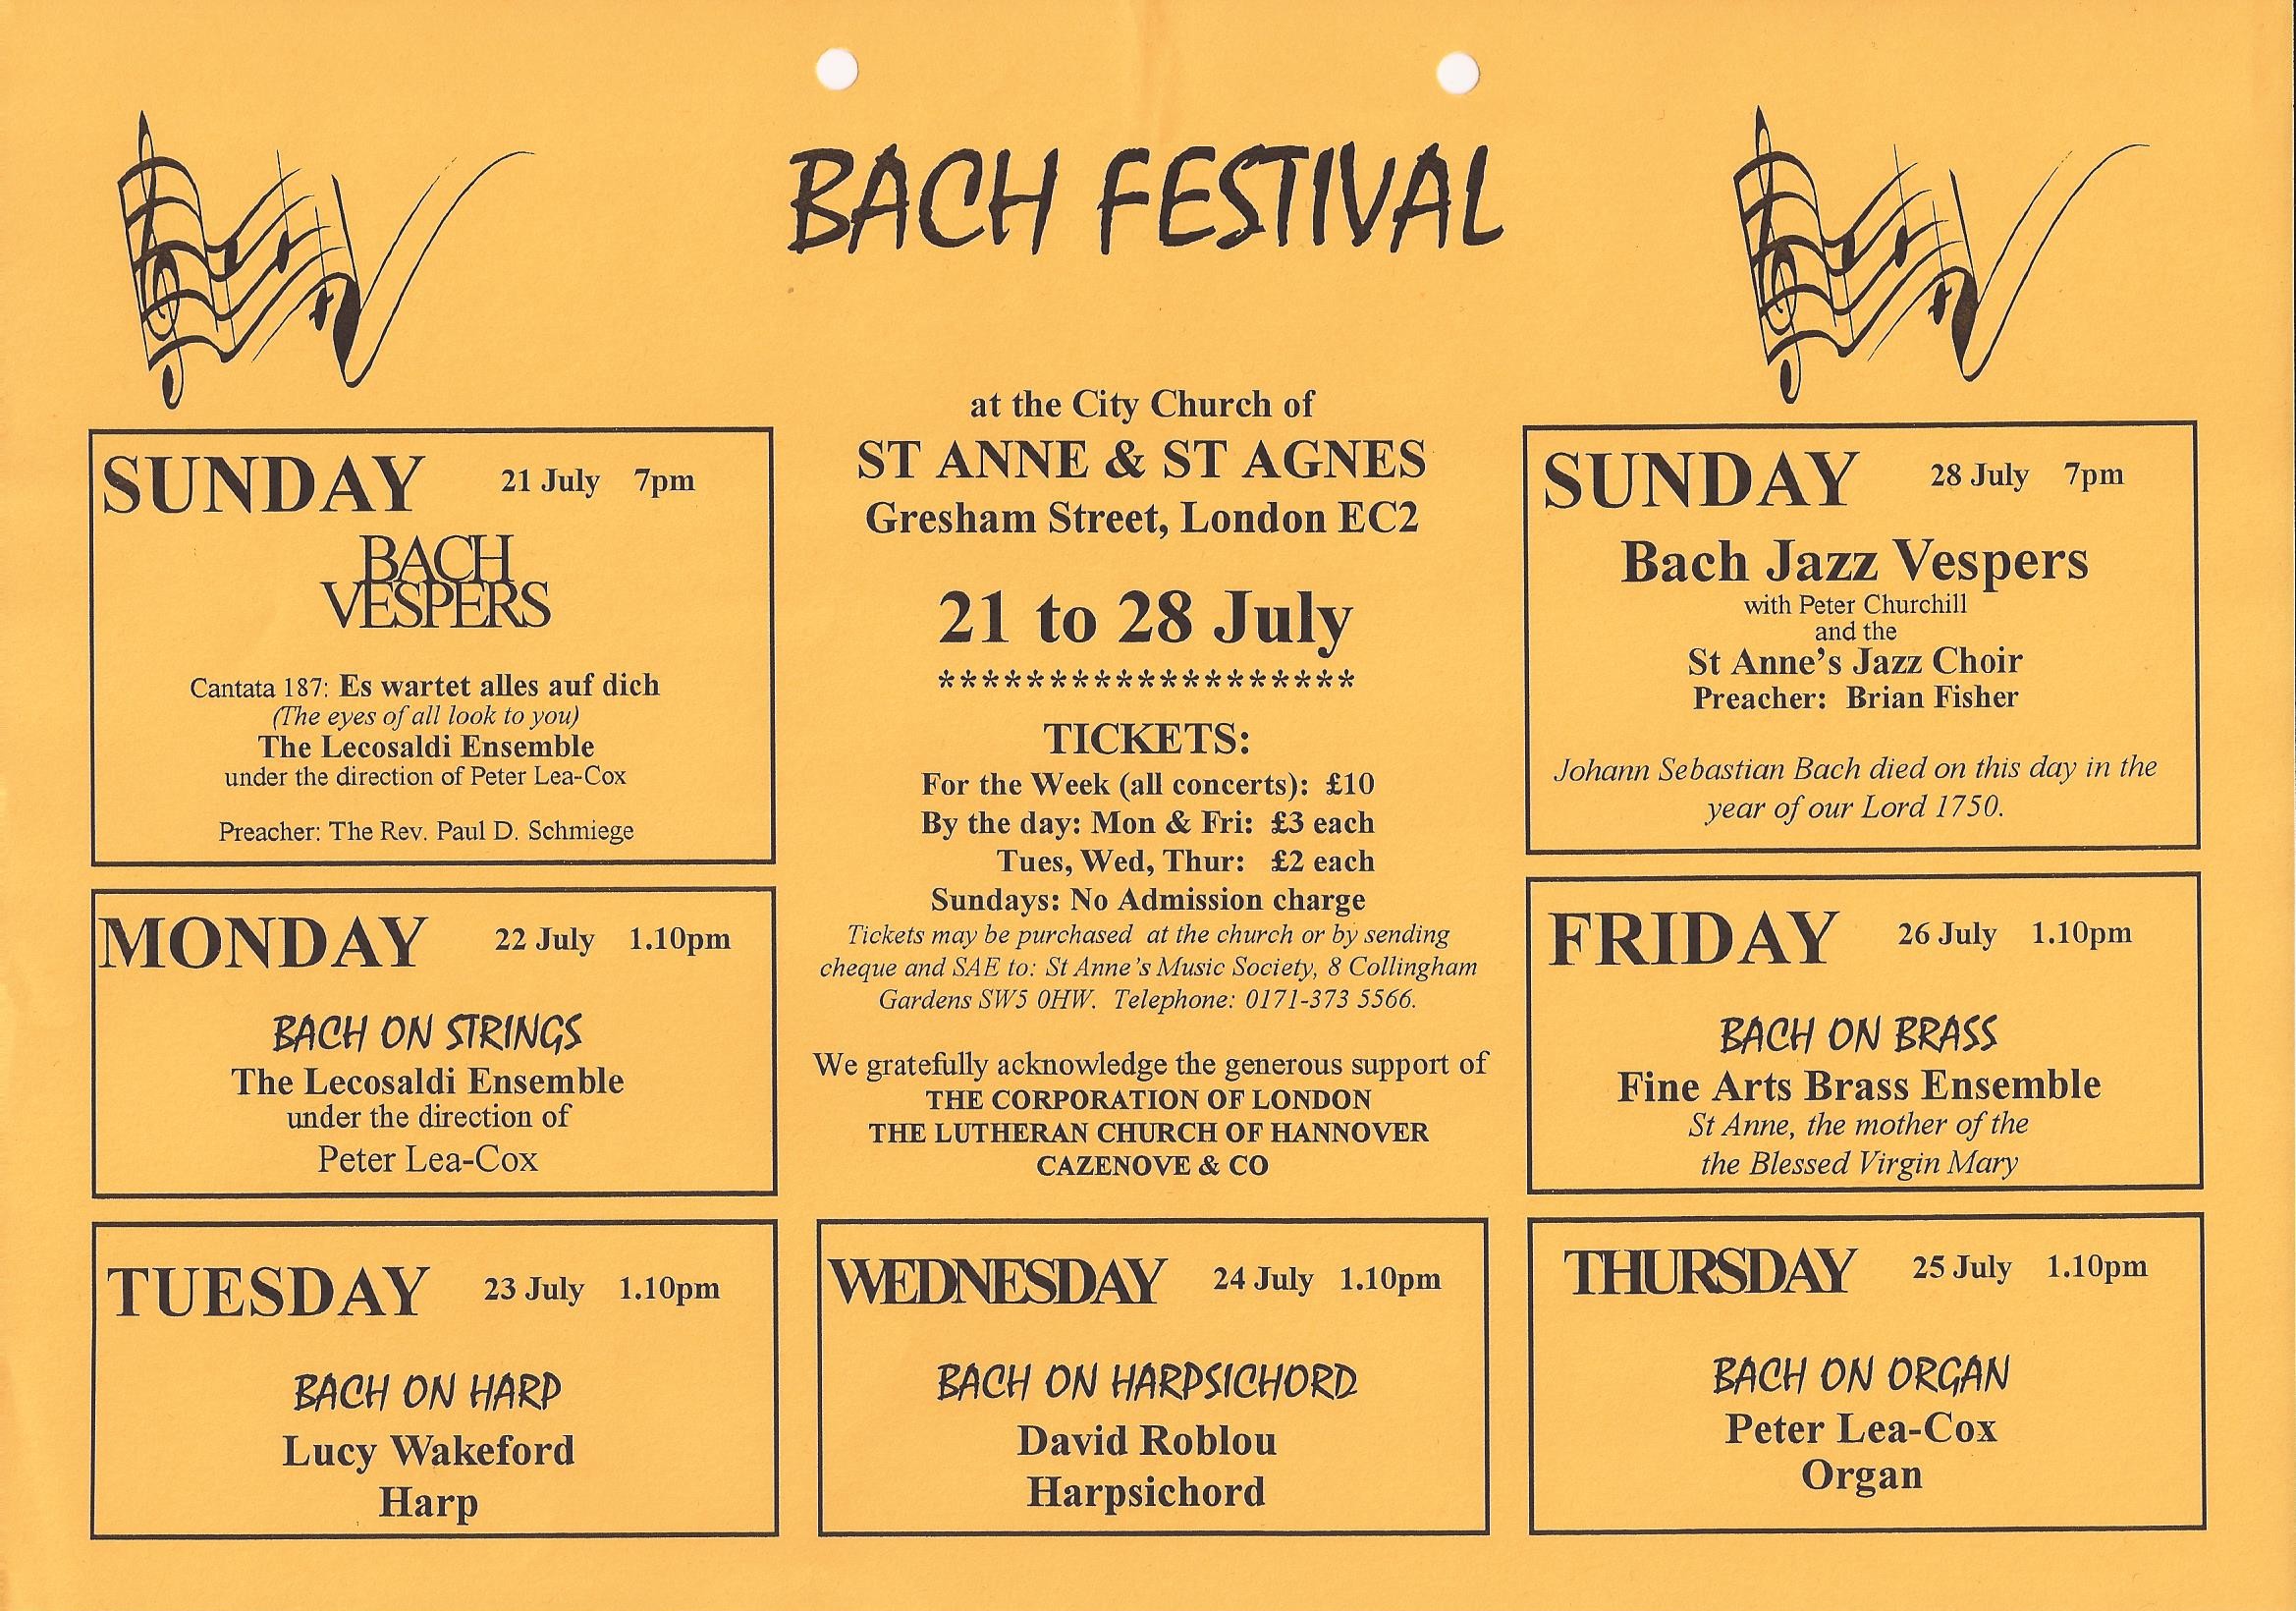 bach festival 1996